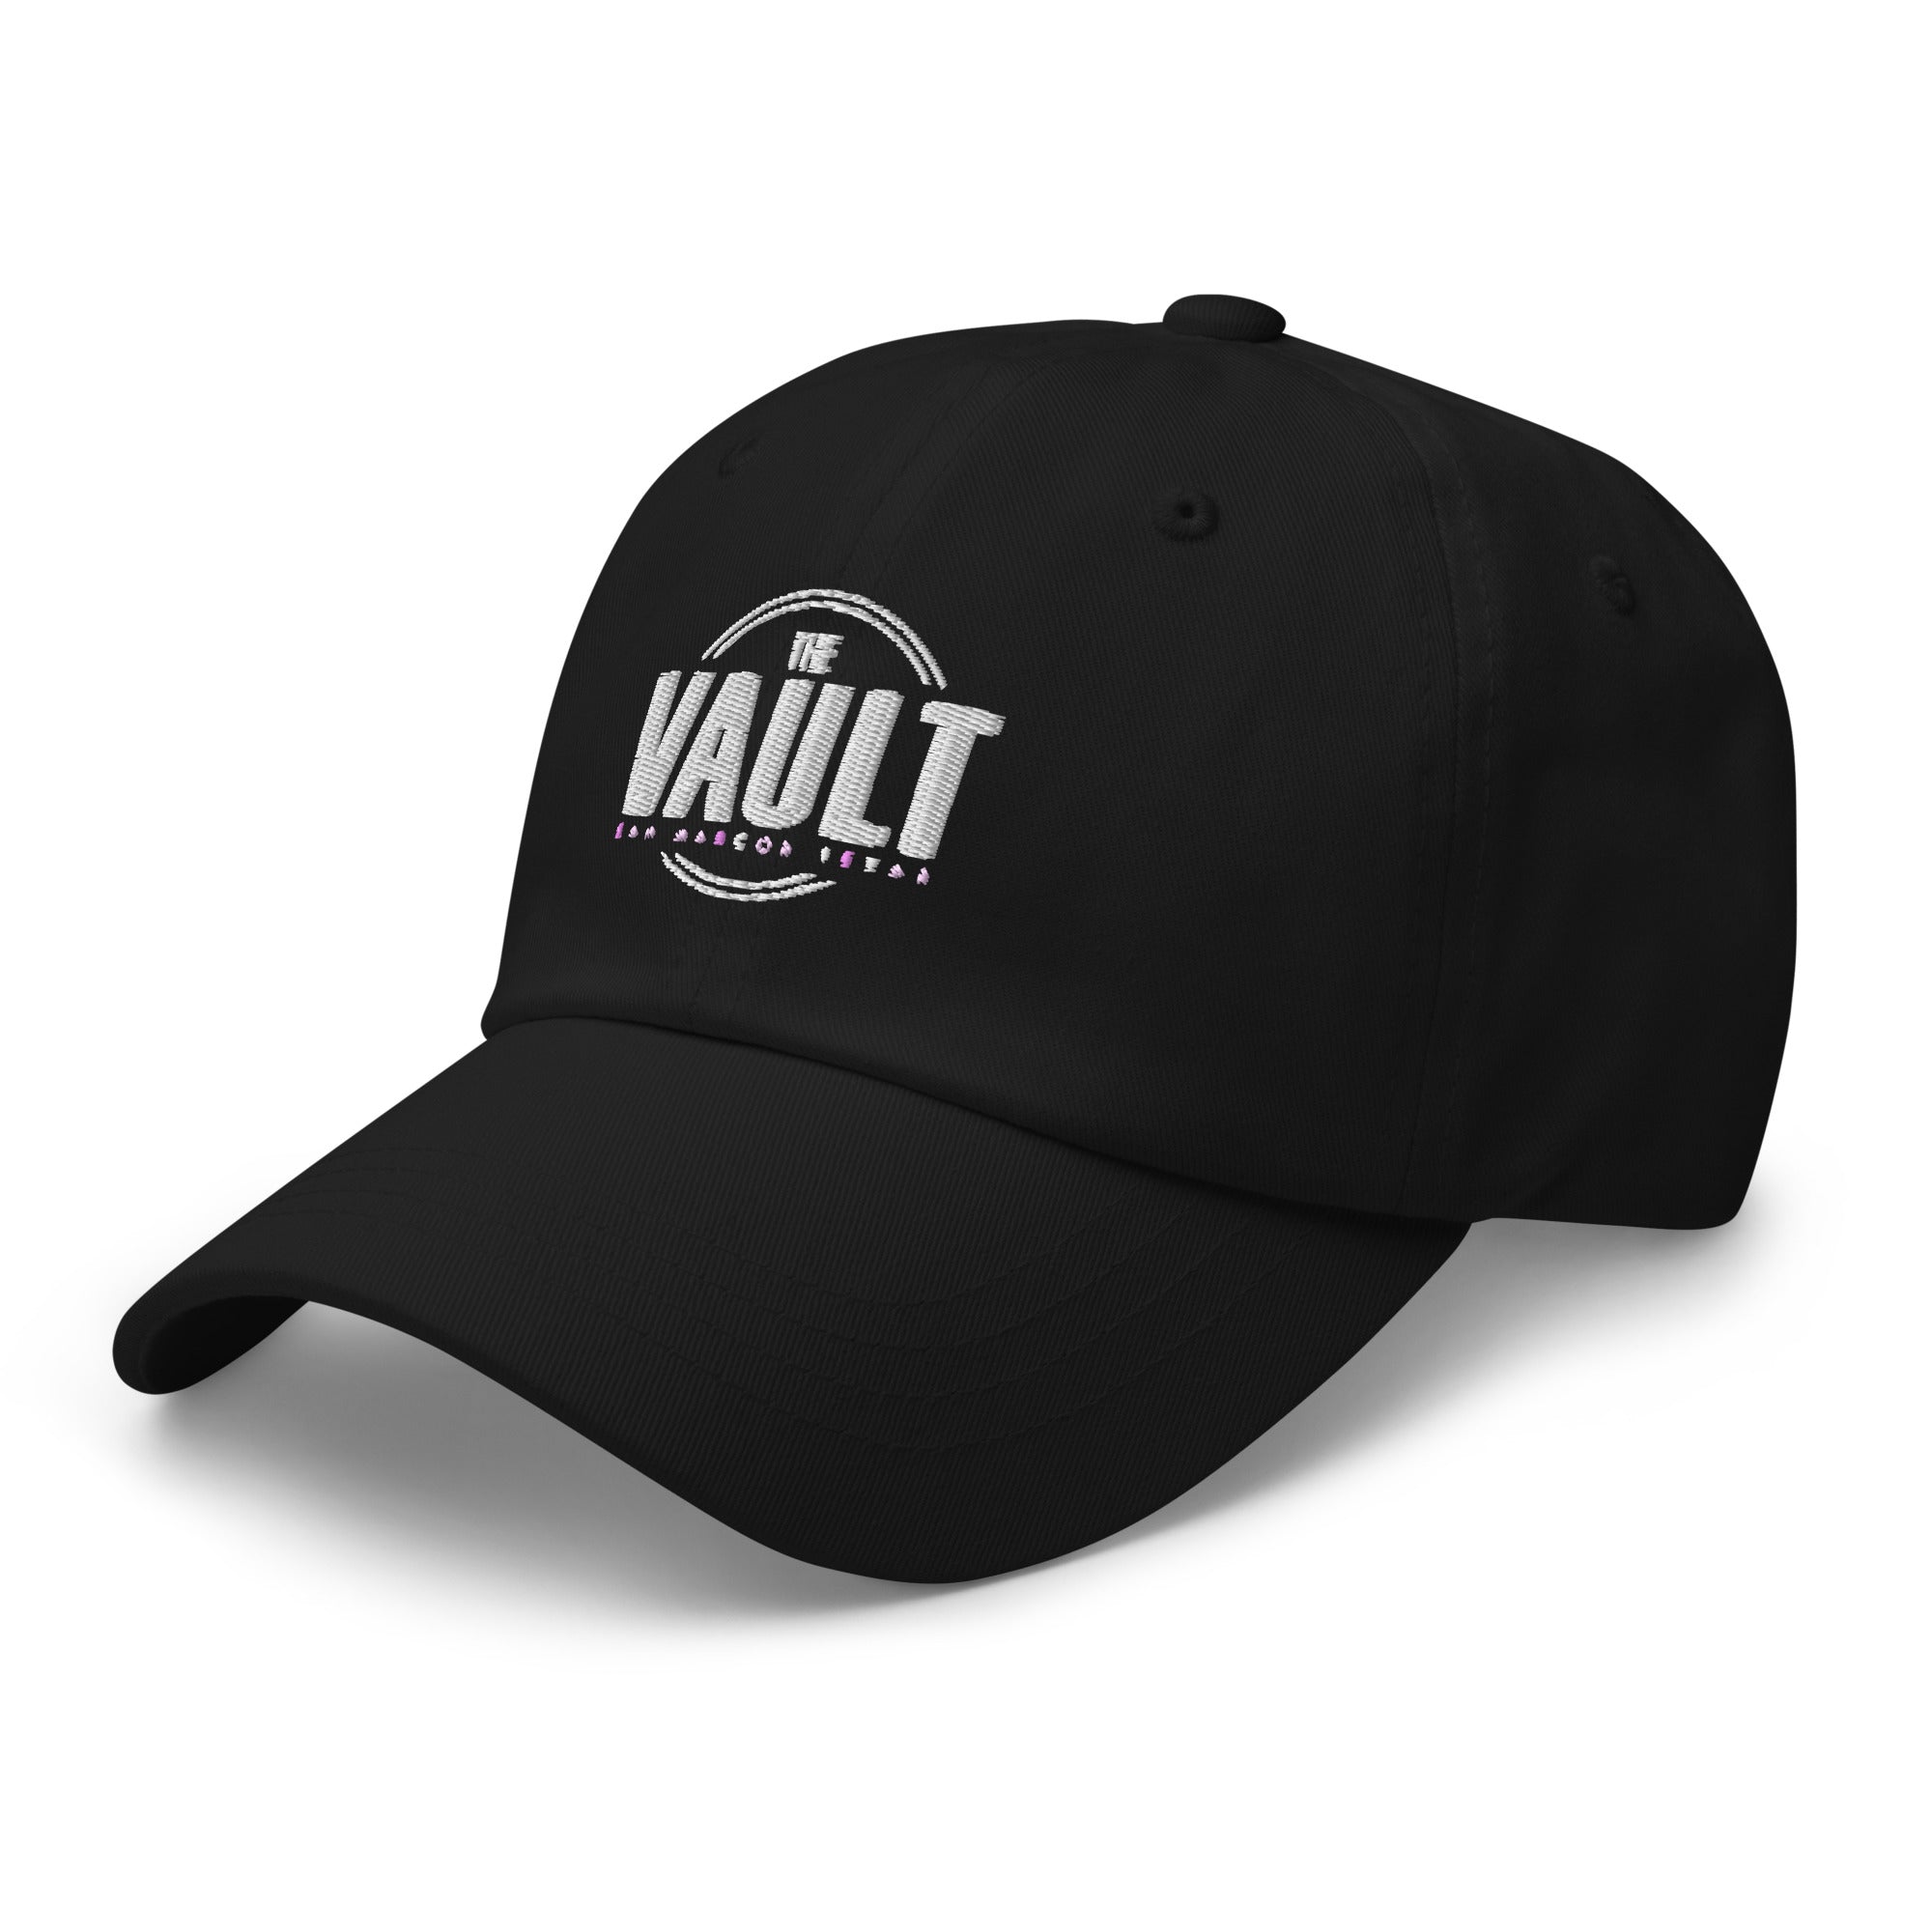 Hats – The Vault